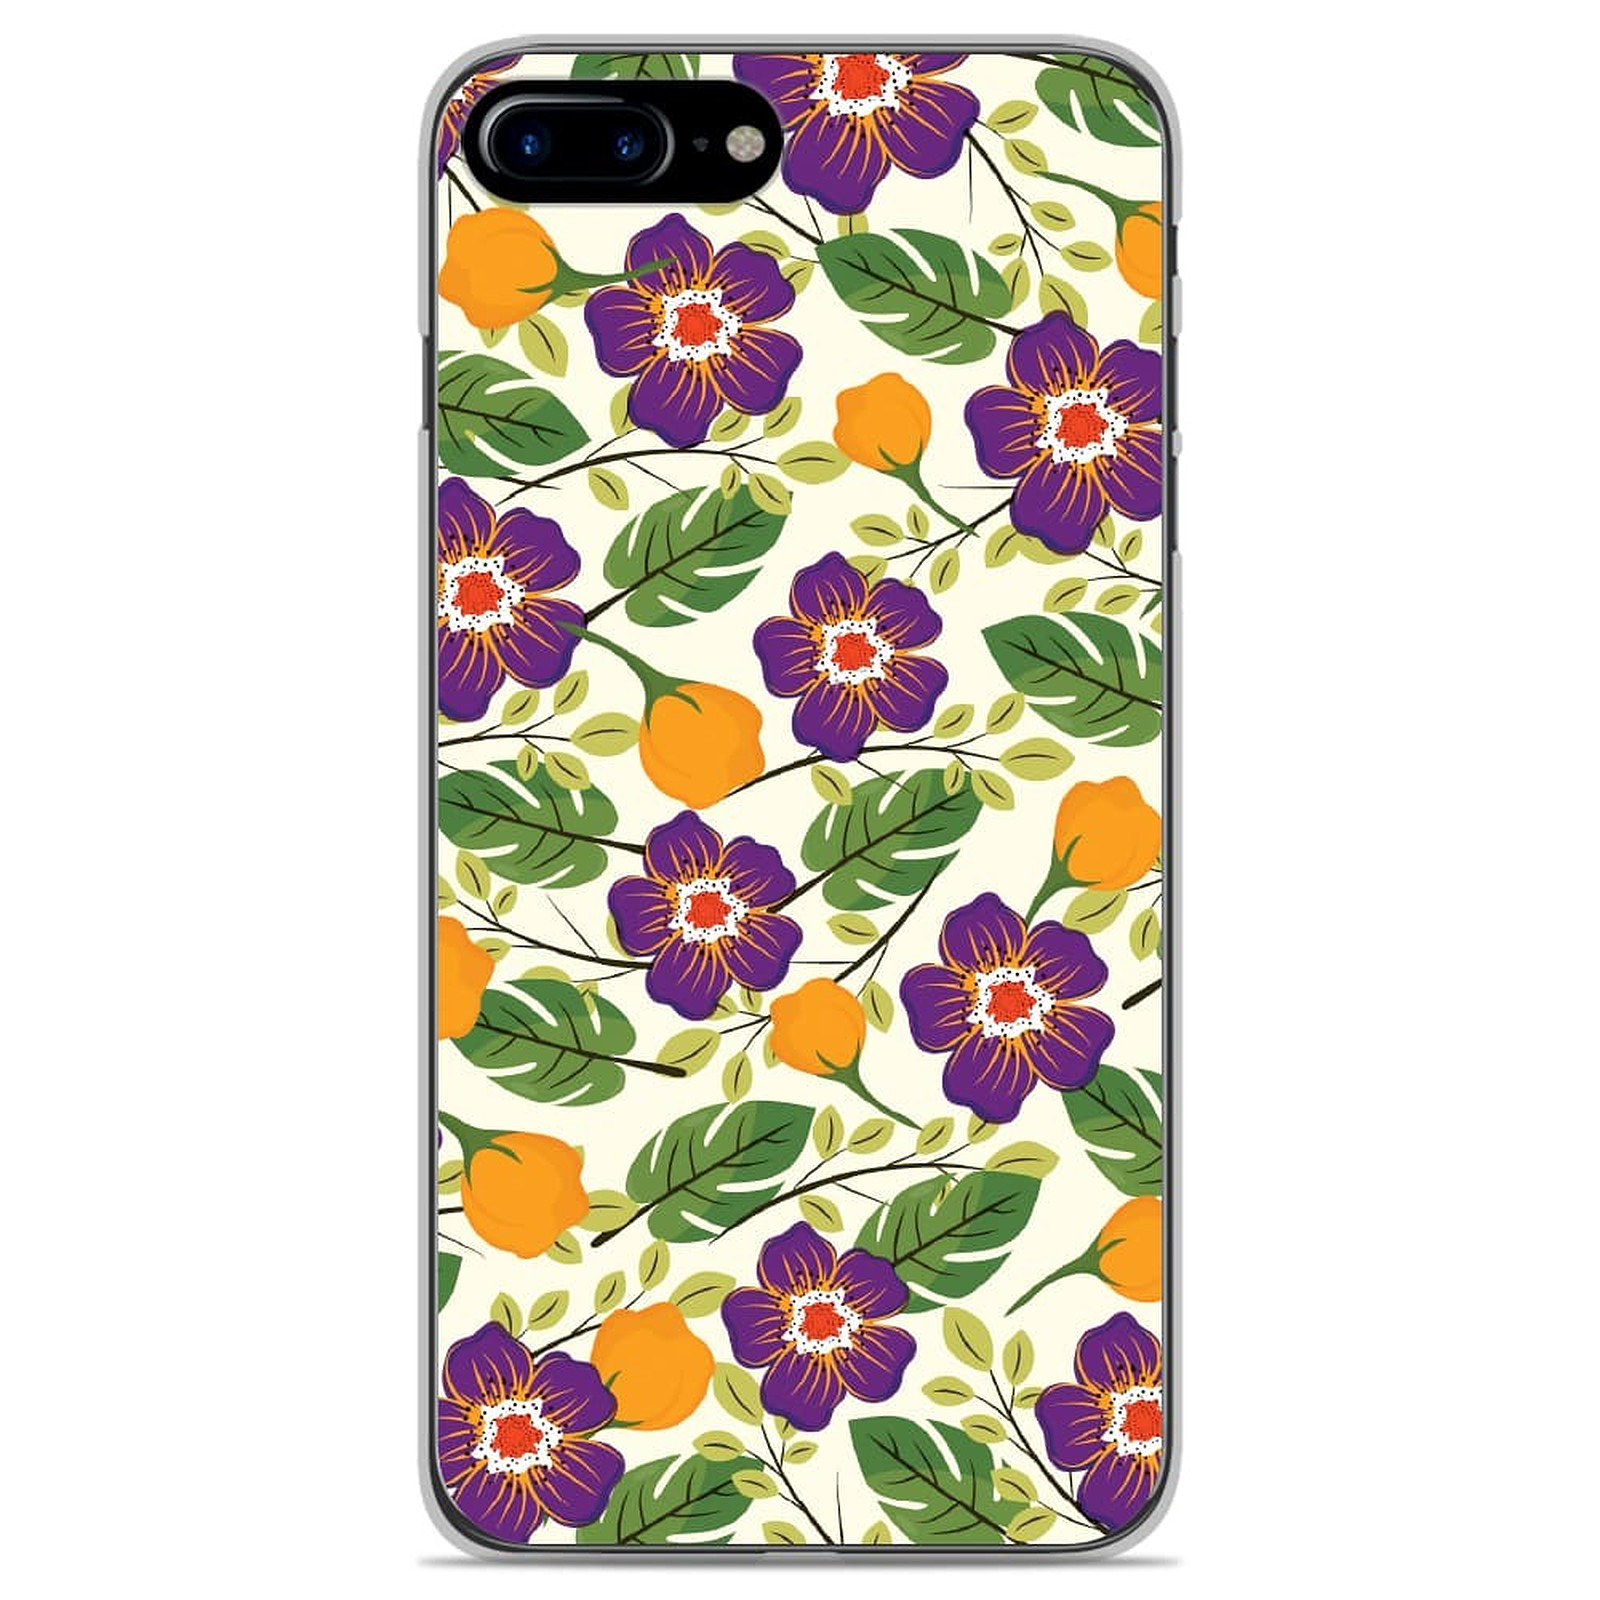 1001 Coques Coque silicone gel Apple iPhone 8 Plus motif Fleurs Violettes - Coque telephone 1001Coques